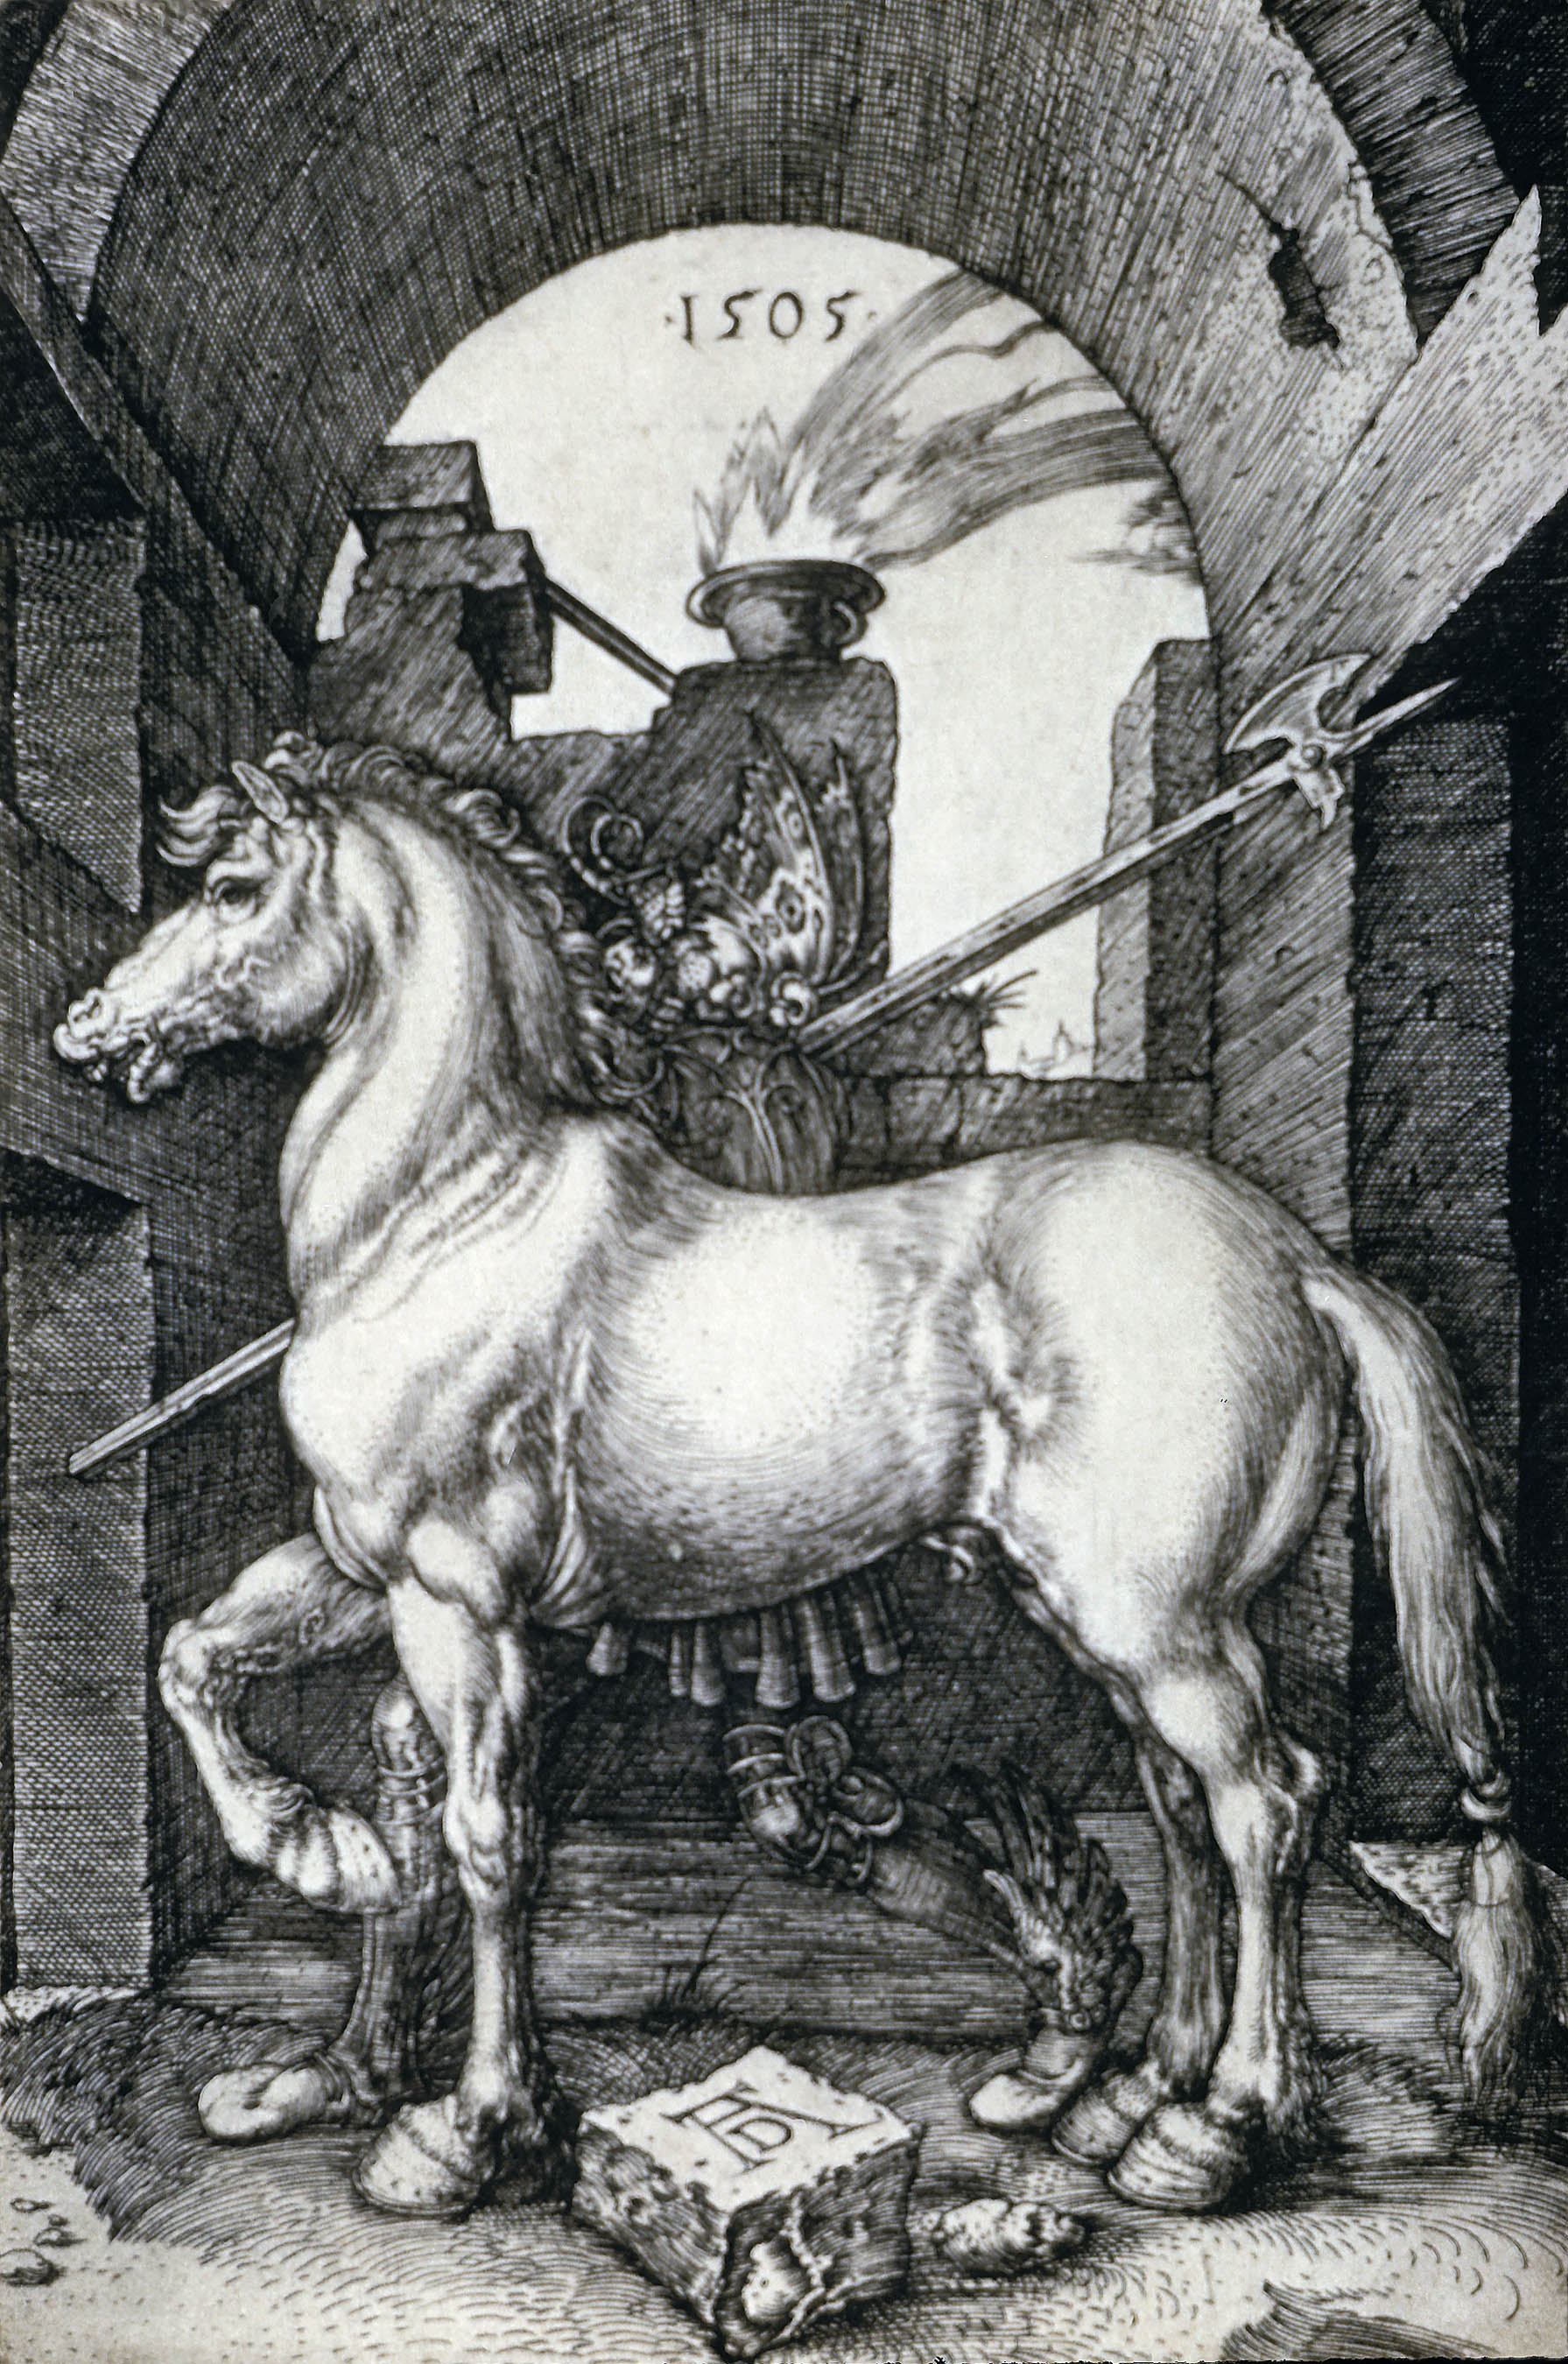 Pequeno Cavalo by Albrecht Dürer - 1505 - - 